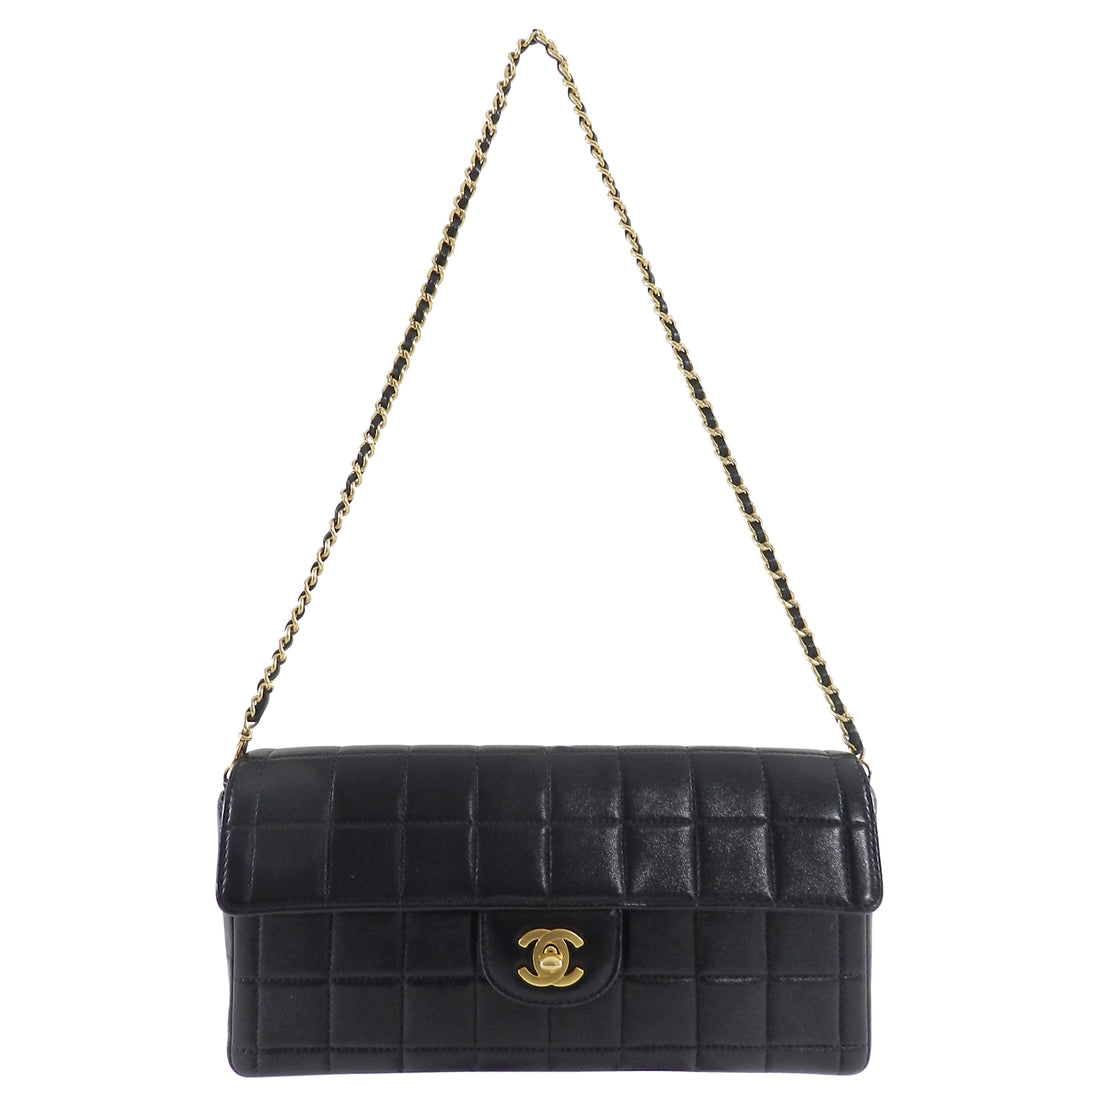 Chanel Black Chocolate Bar Gold Hardware East West Flap Bag – I